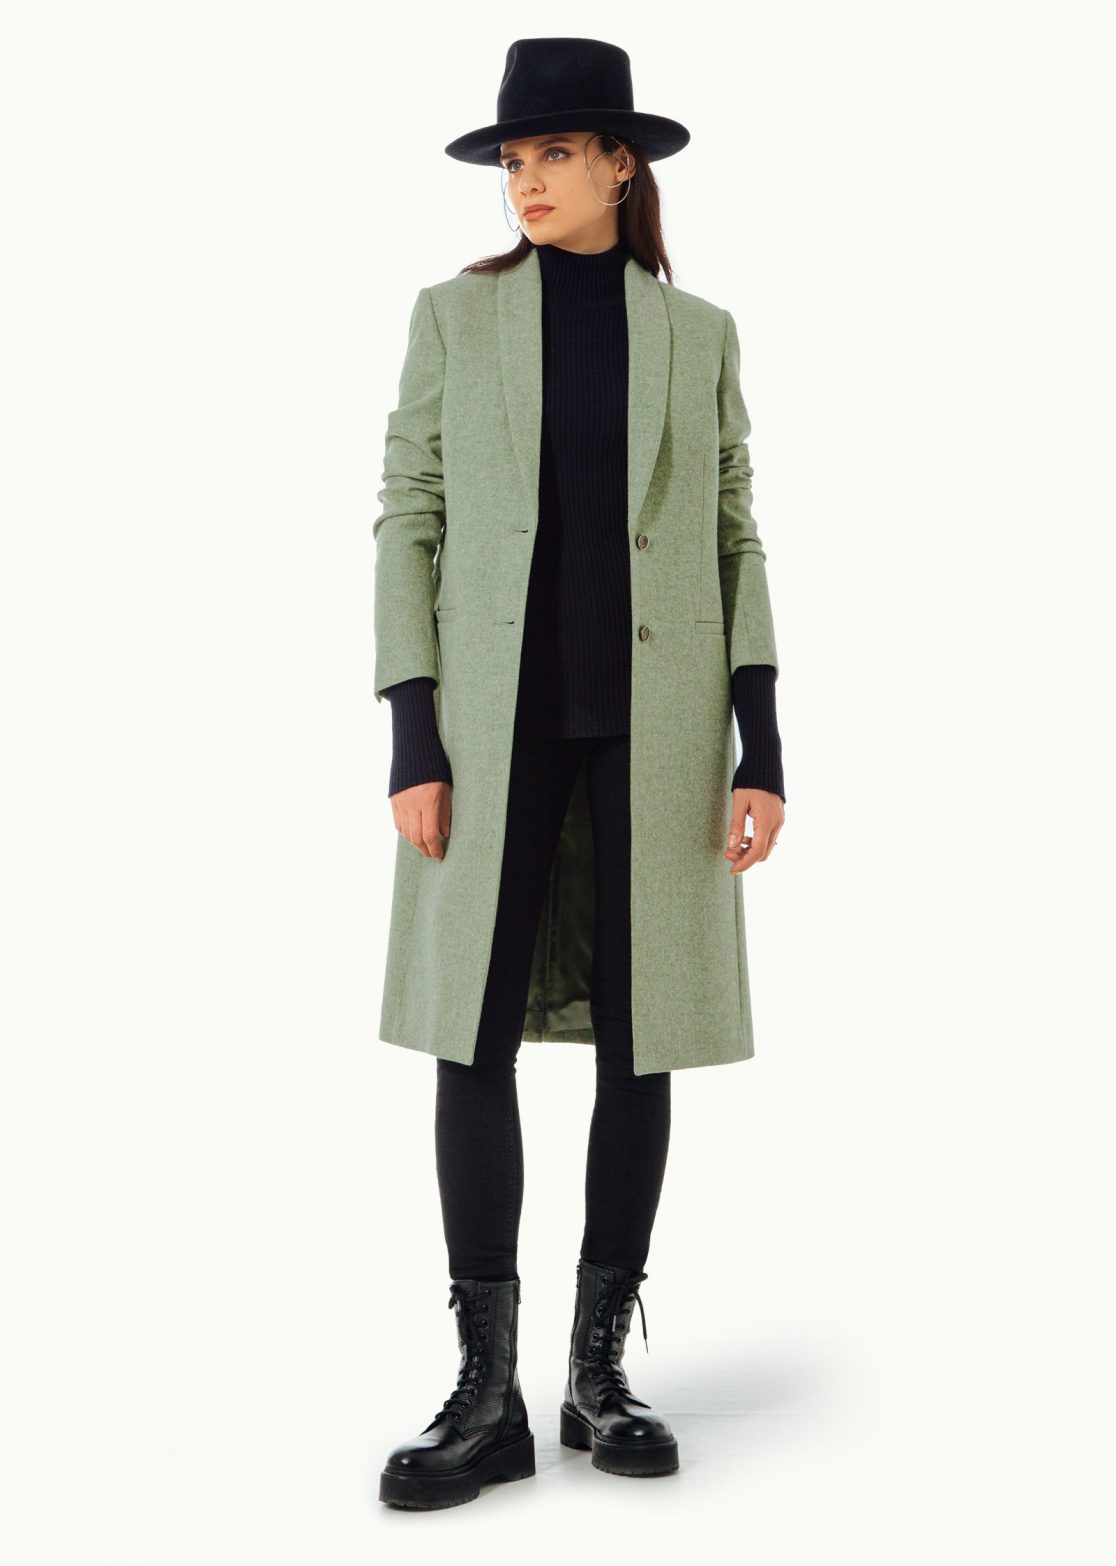 Women - Suit Jackets - Coats - Wald Suit Jacket Green Sage Image Primary